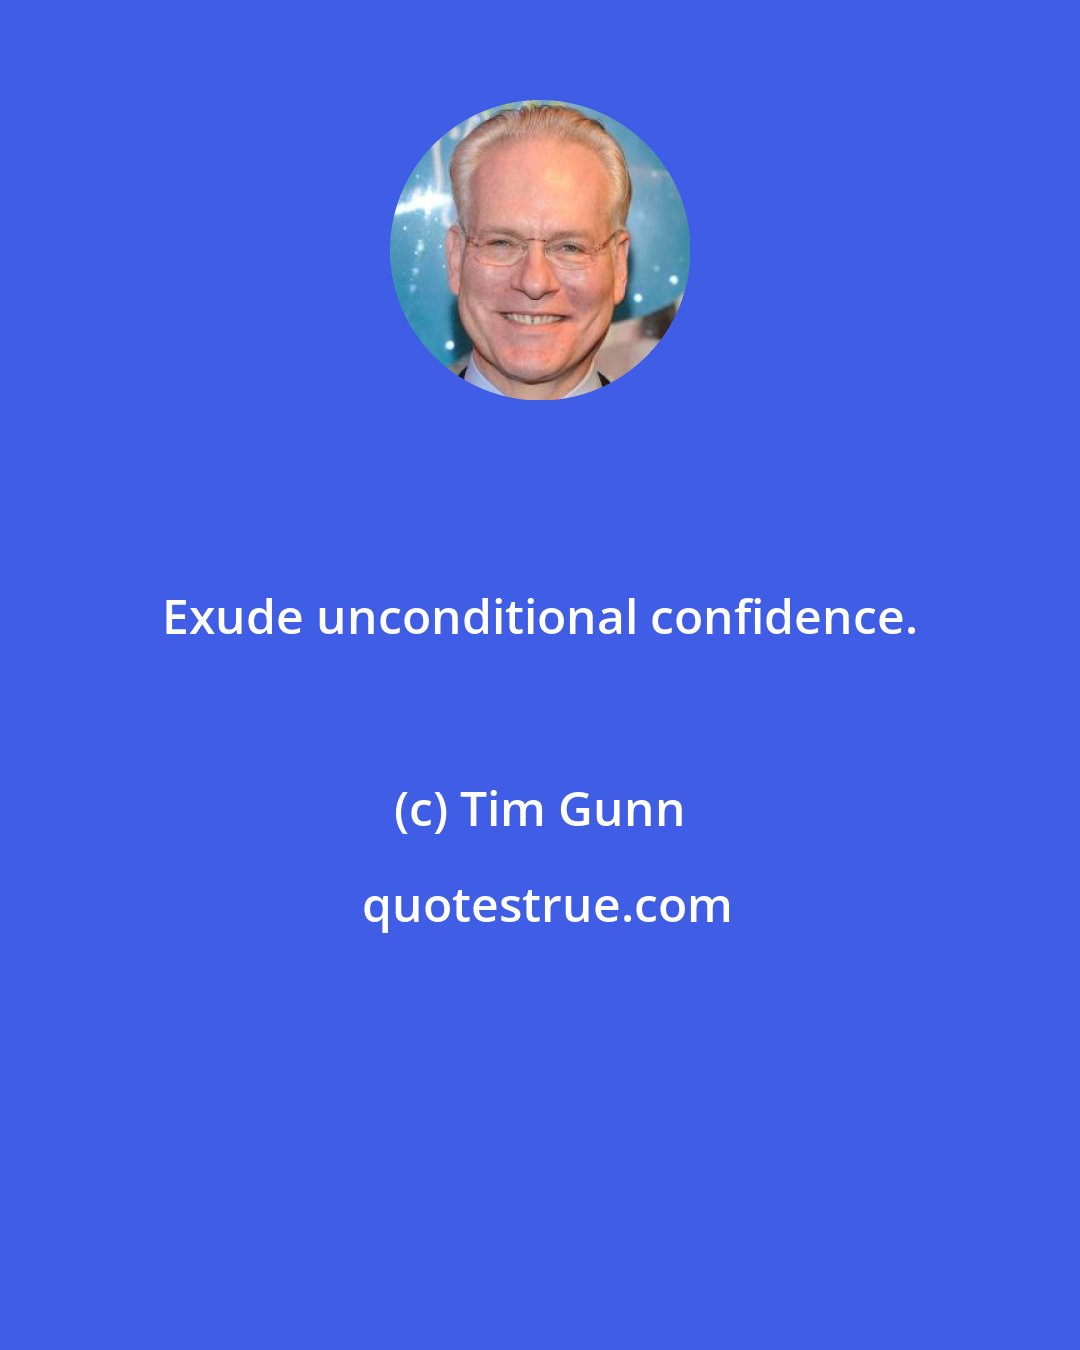 Tim Gunn: Exude unconditional confidence.